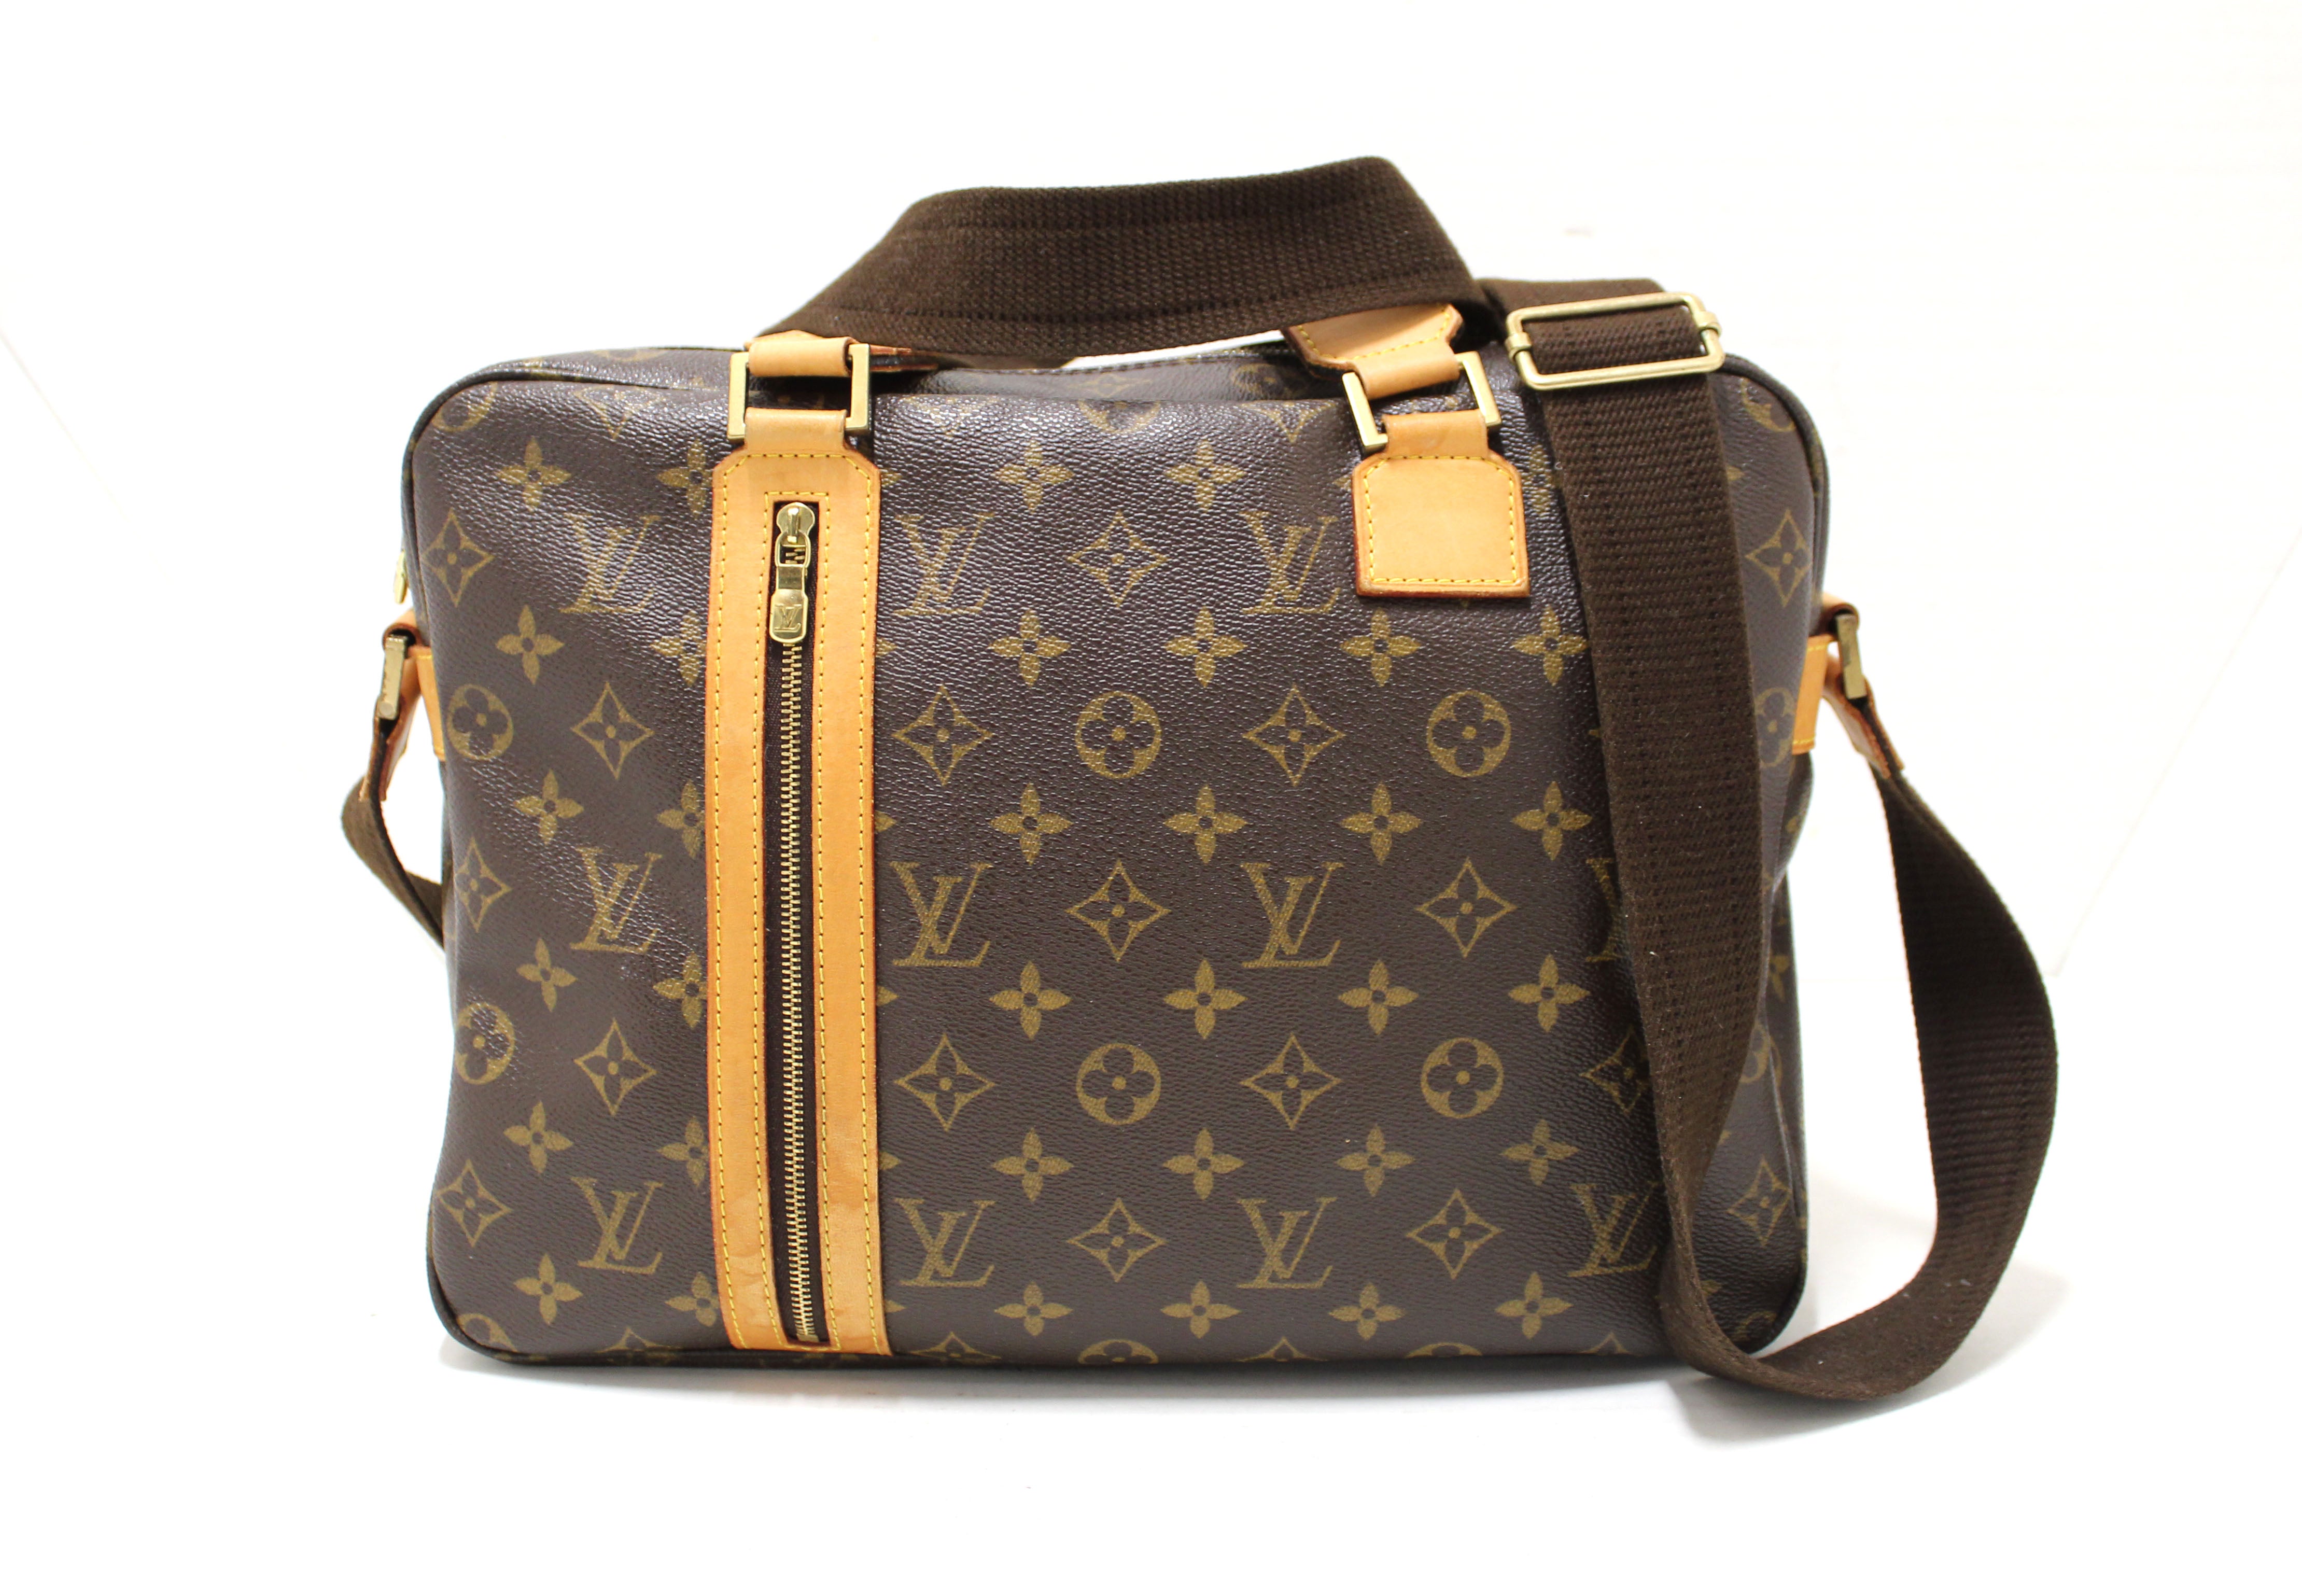 Louis Vuitton Sac Bosphore Business Bag Monogram brown used from japan   eBay